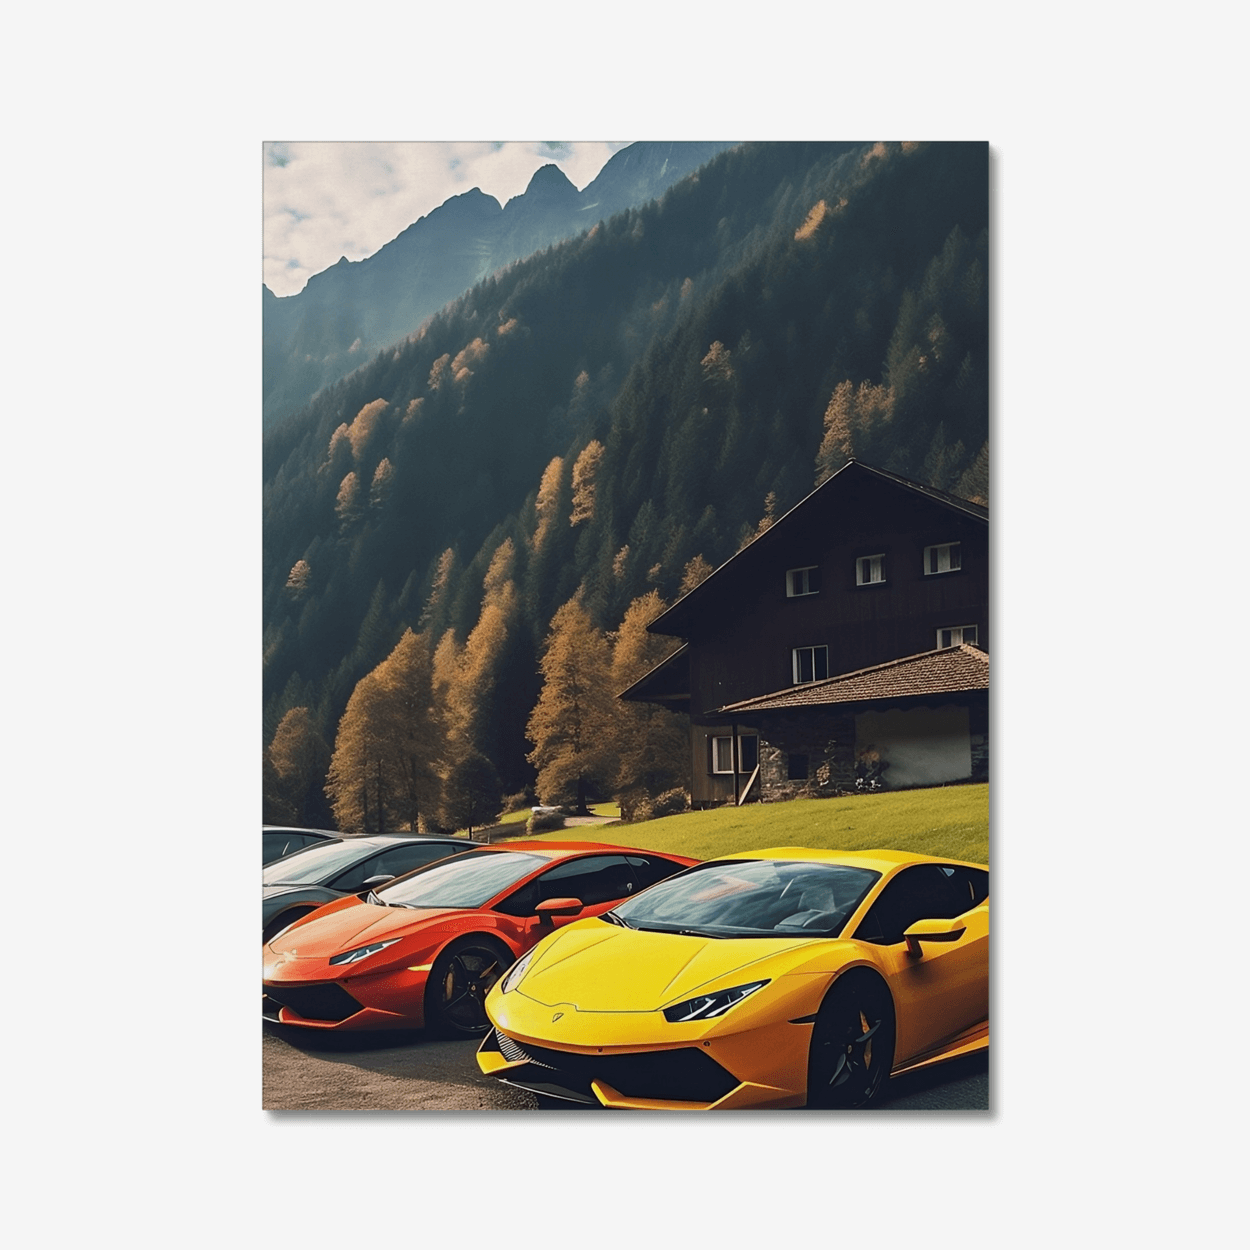 Lamborghini in the mountains